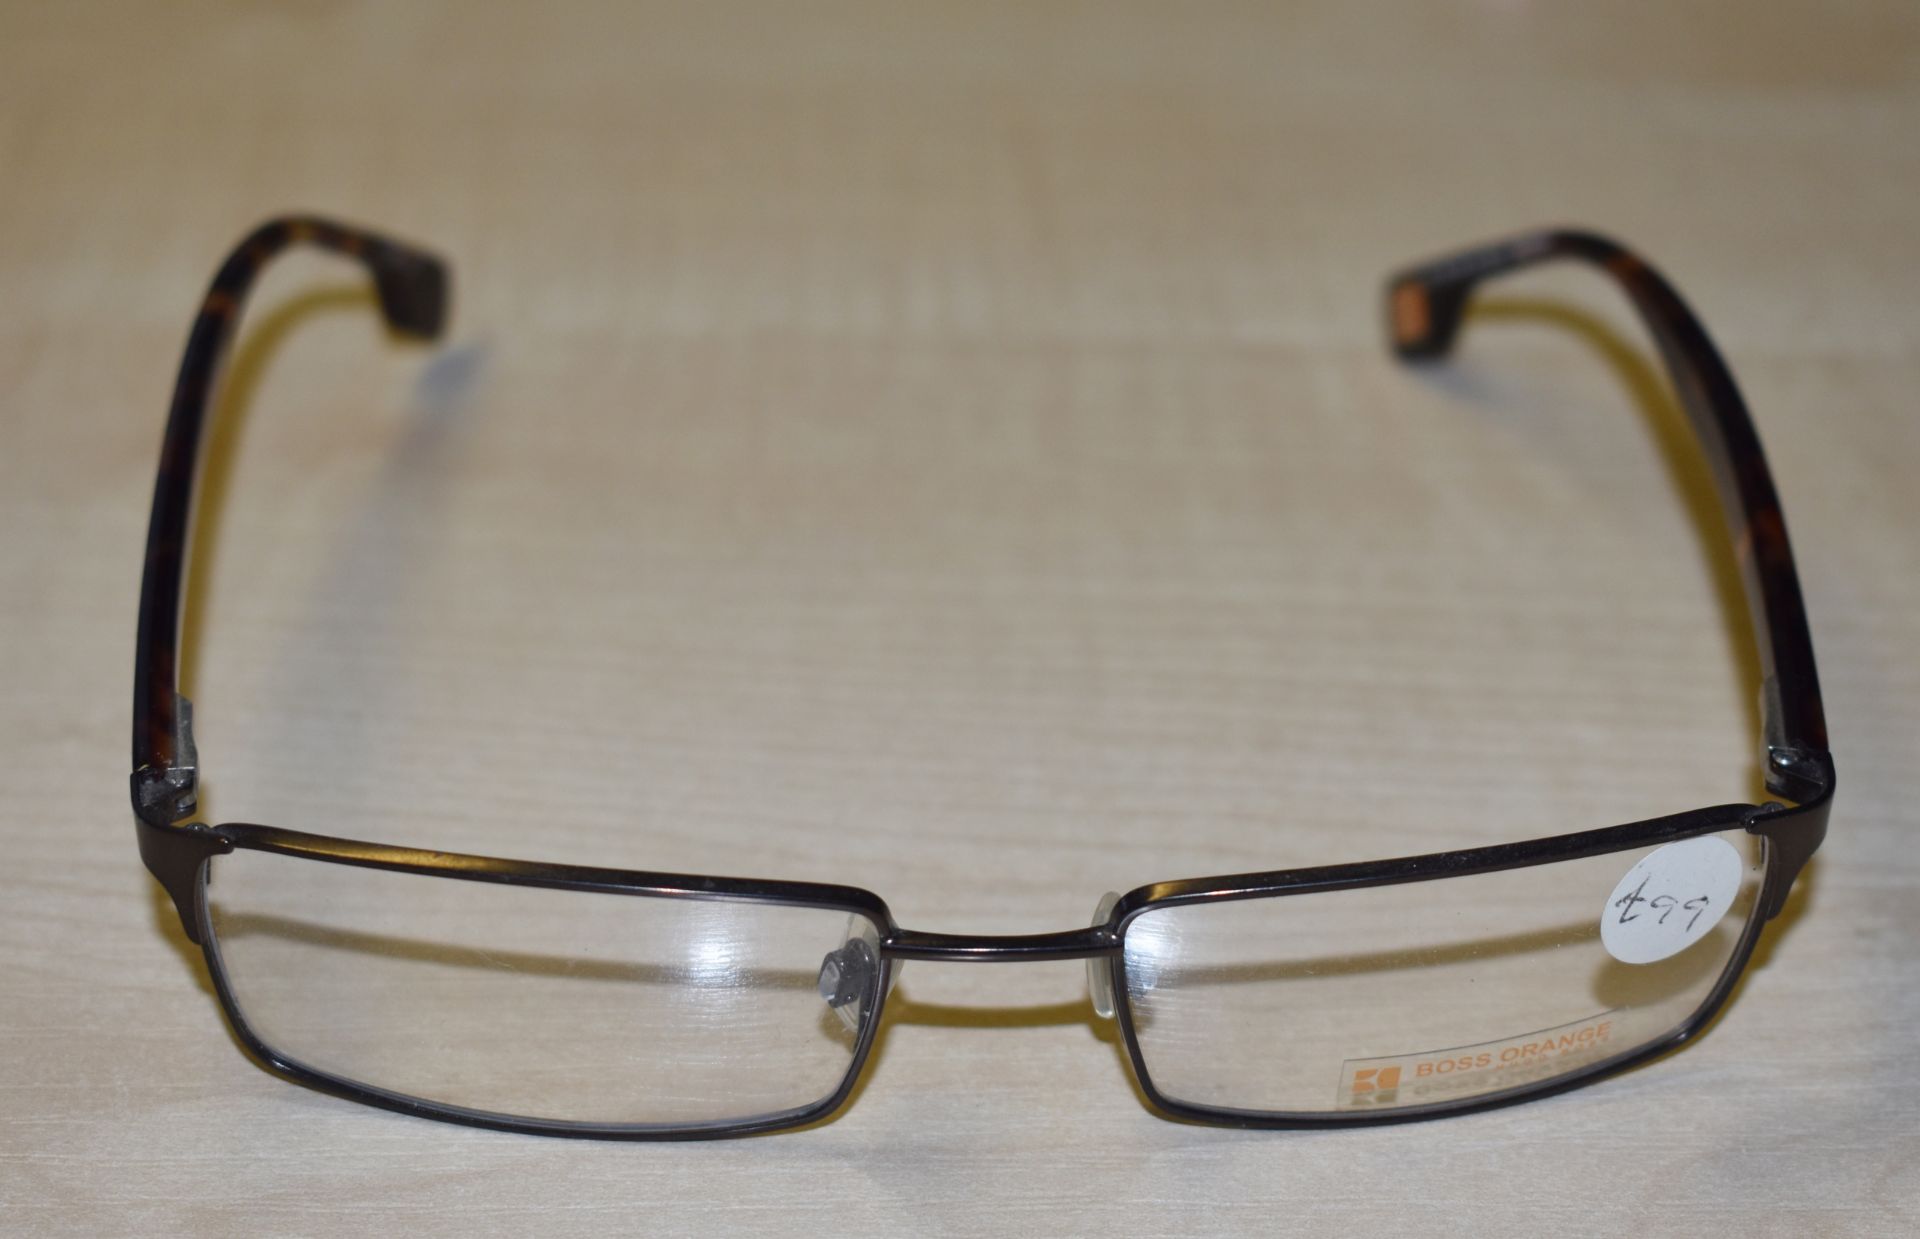 1 x Genuine BOSS ORANGE Spectacle Eye Glasses Frame - Ex Display Stock  - Ref: GTI193 - CL645 -